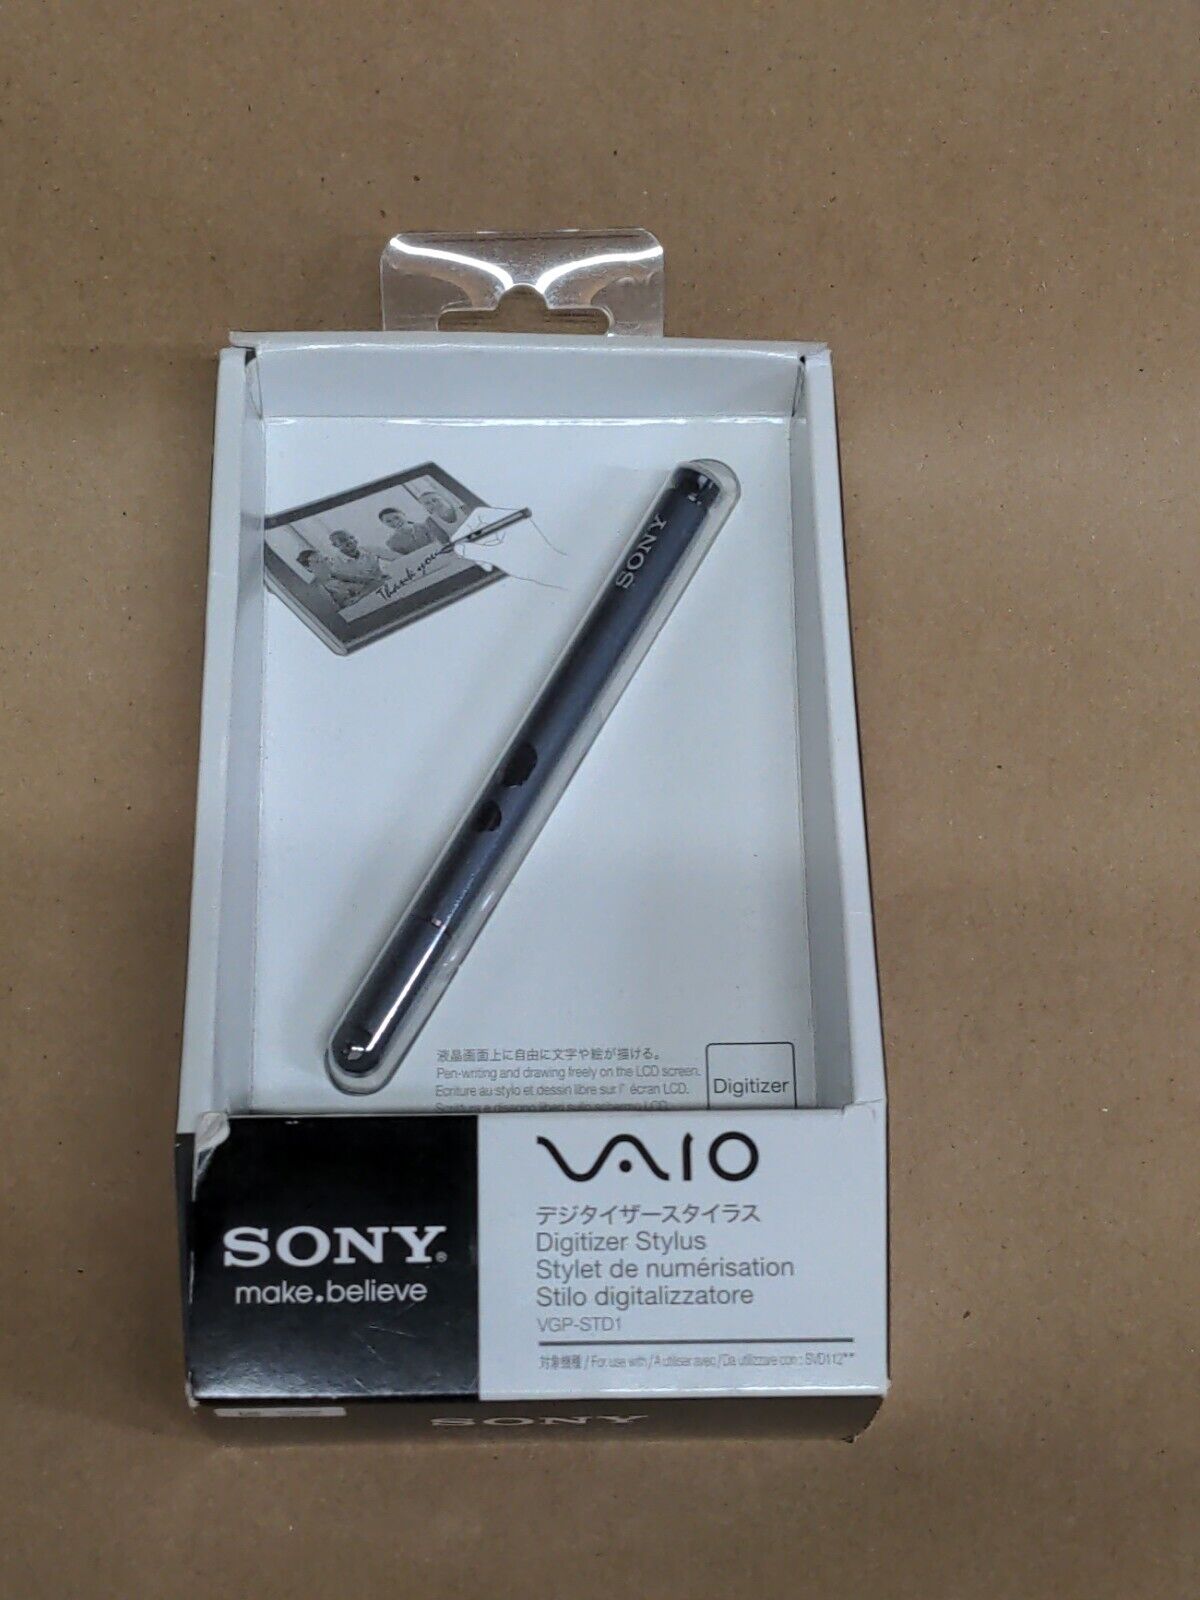 New Original Sony IT VAIO Duo 11 Digitizer Stylus - Black (VGP-STD1/B)